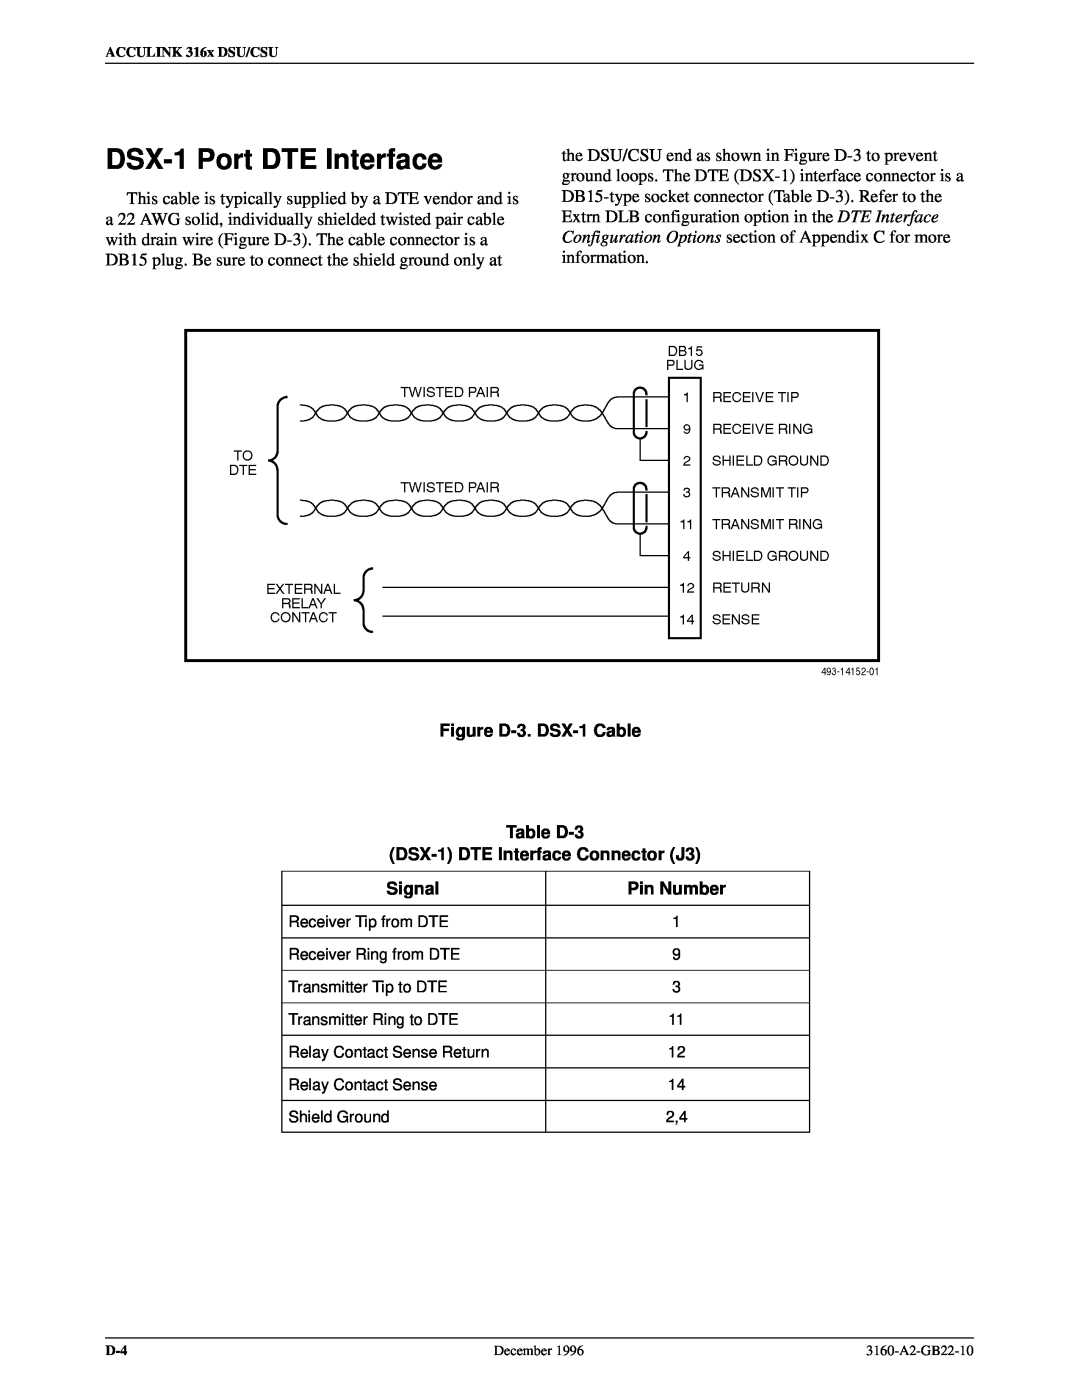 Paradyne 316x manual DSX-1 Port DTE Interface, Figure D-3. DSX-1 Cable Table D-3 DSX-1 DTE Interface Connector J3, Signal 